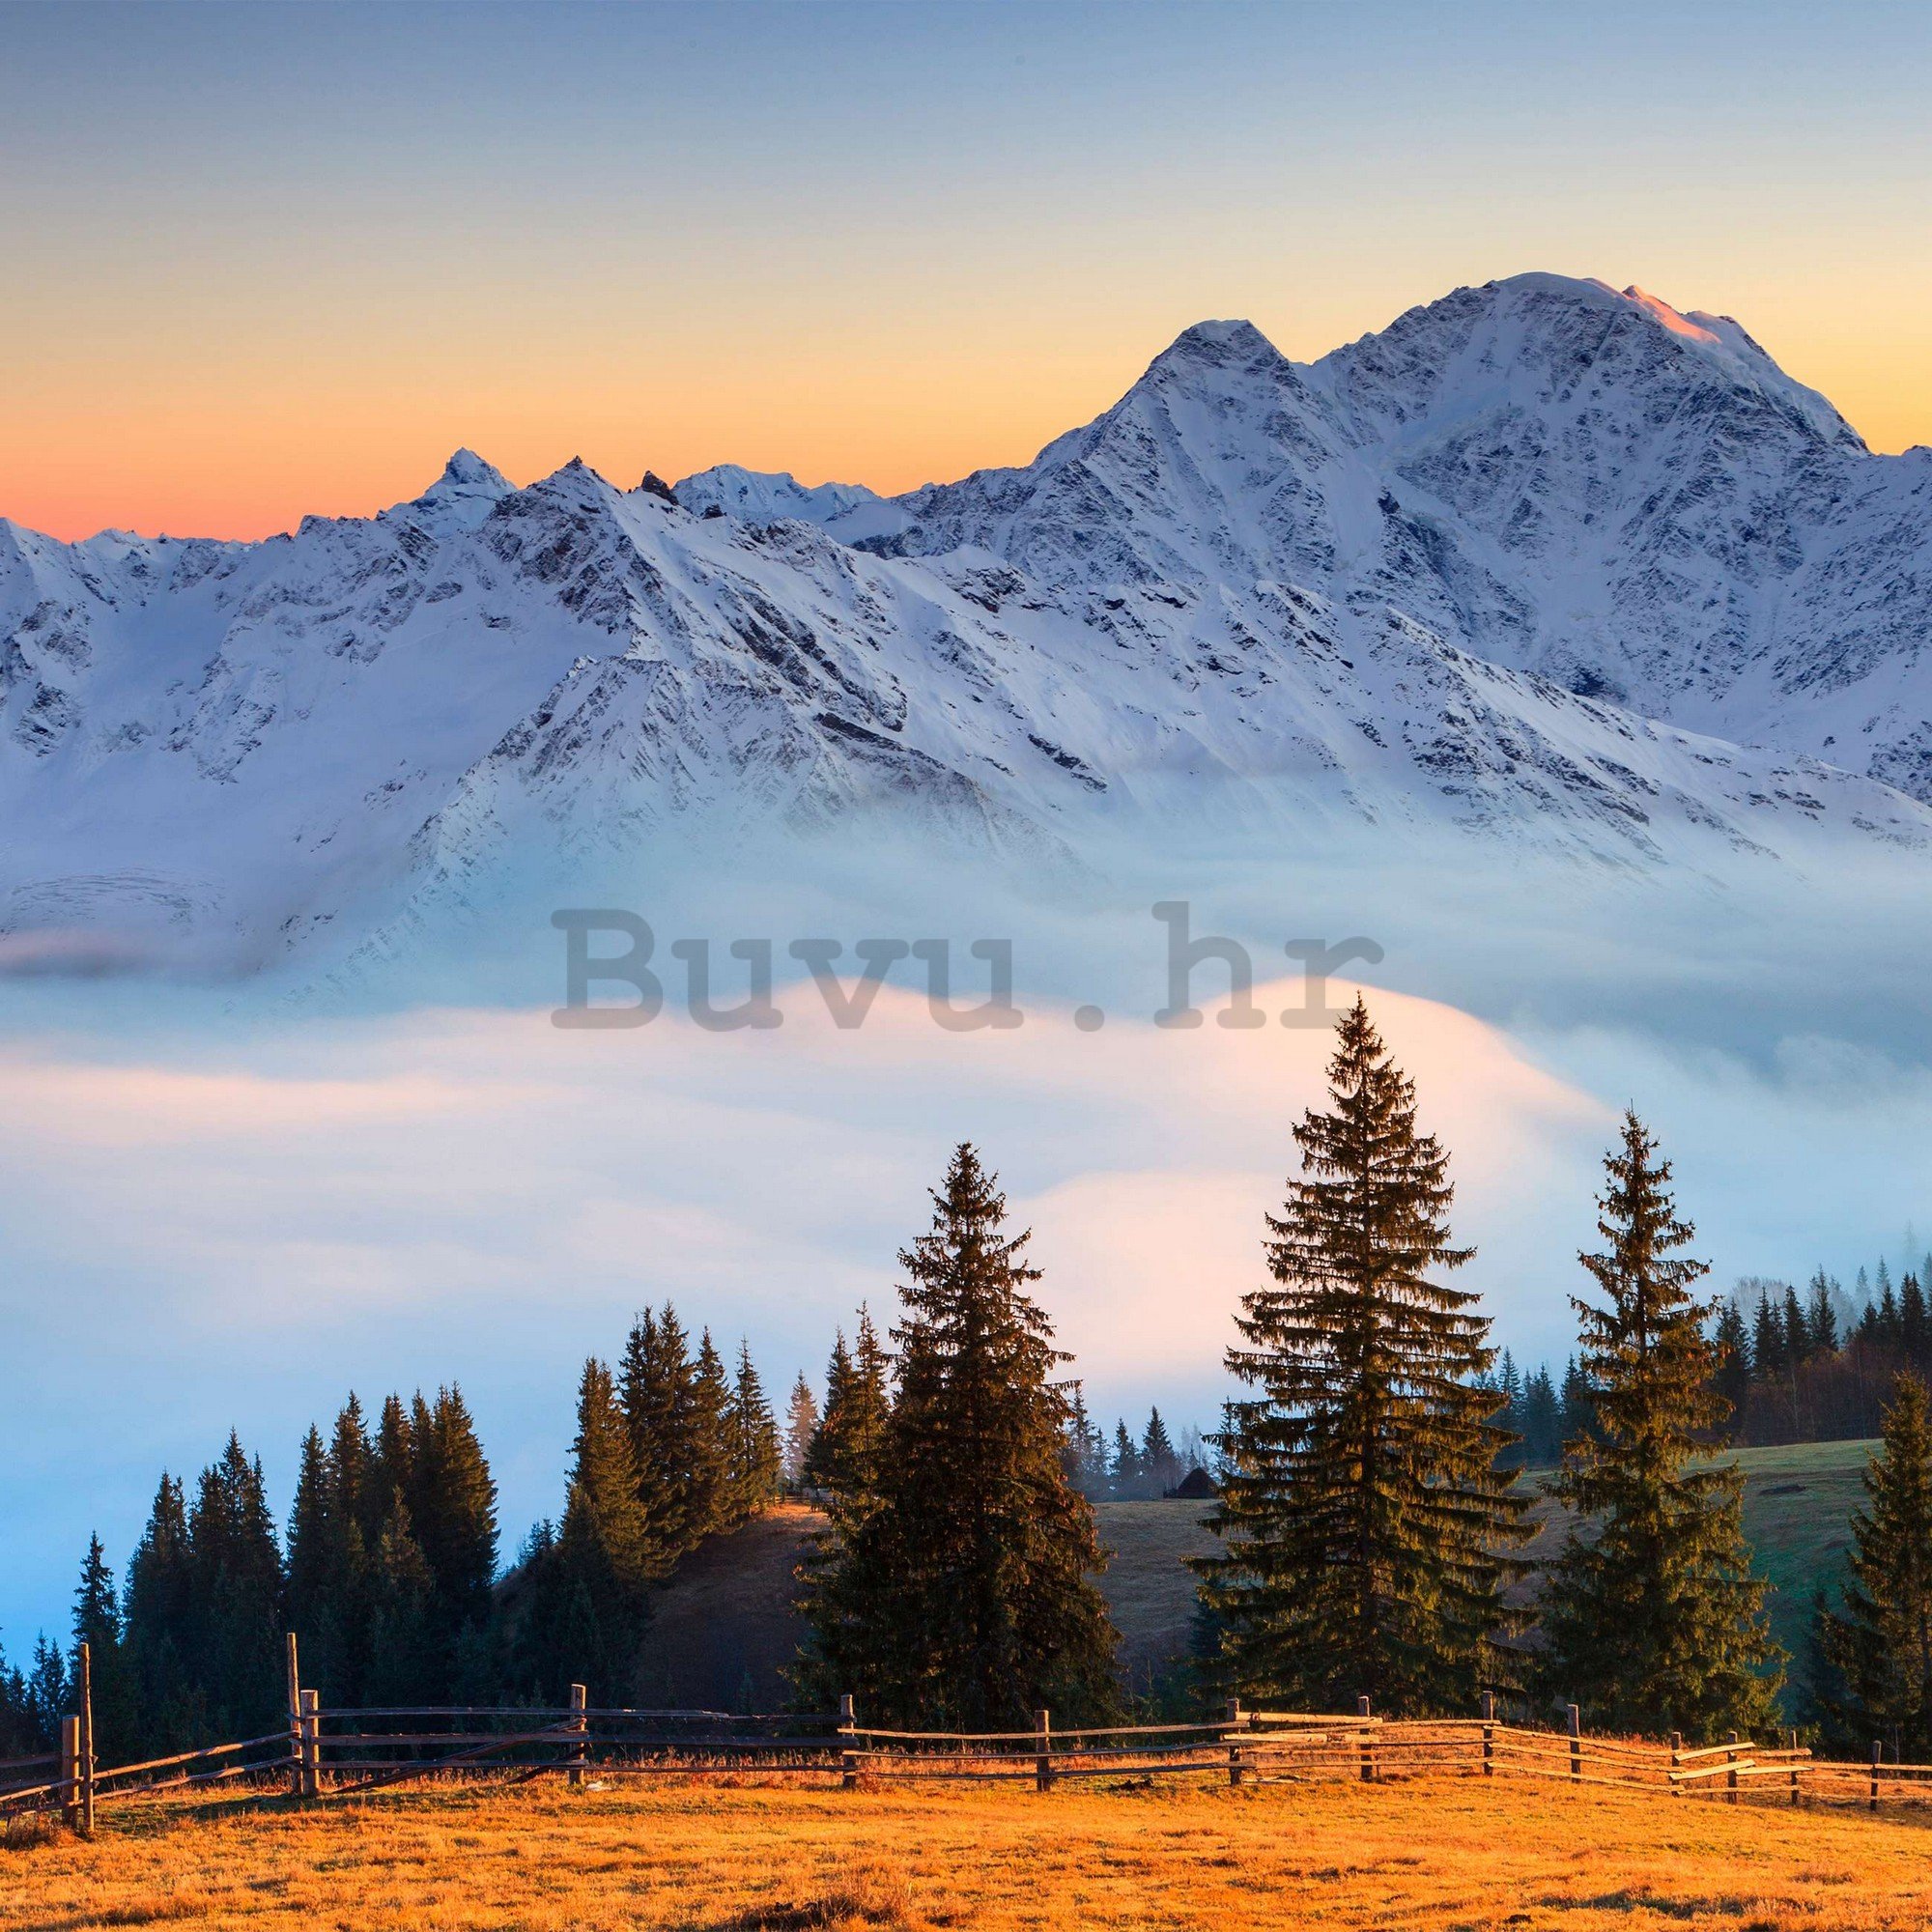 Vlies foto tapeta: Snježni planinski vrhovi - 254x184 cm